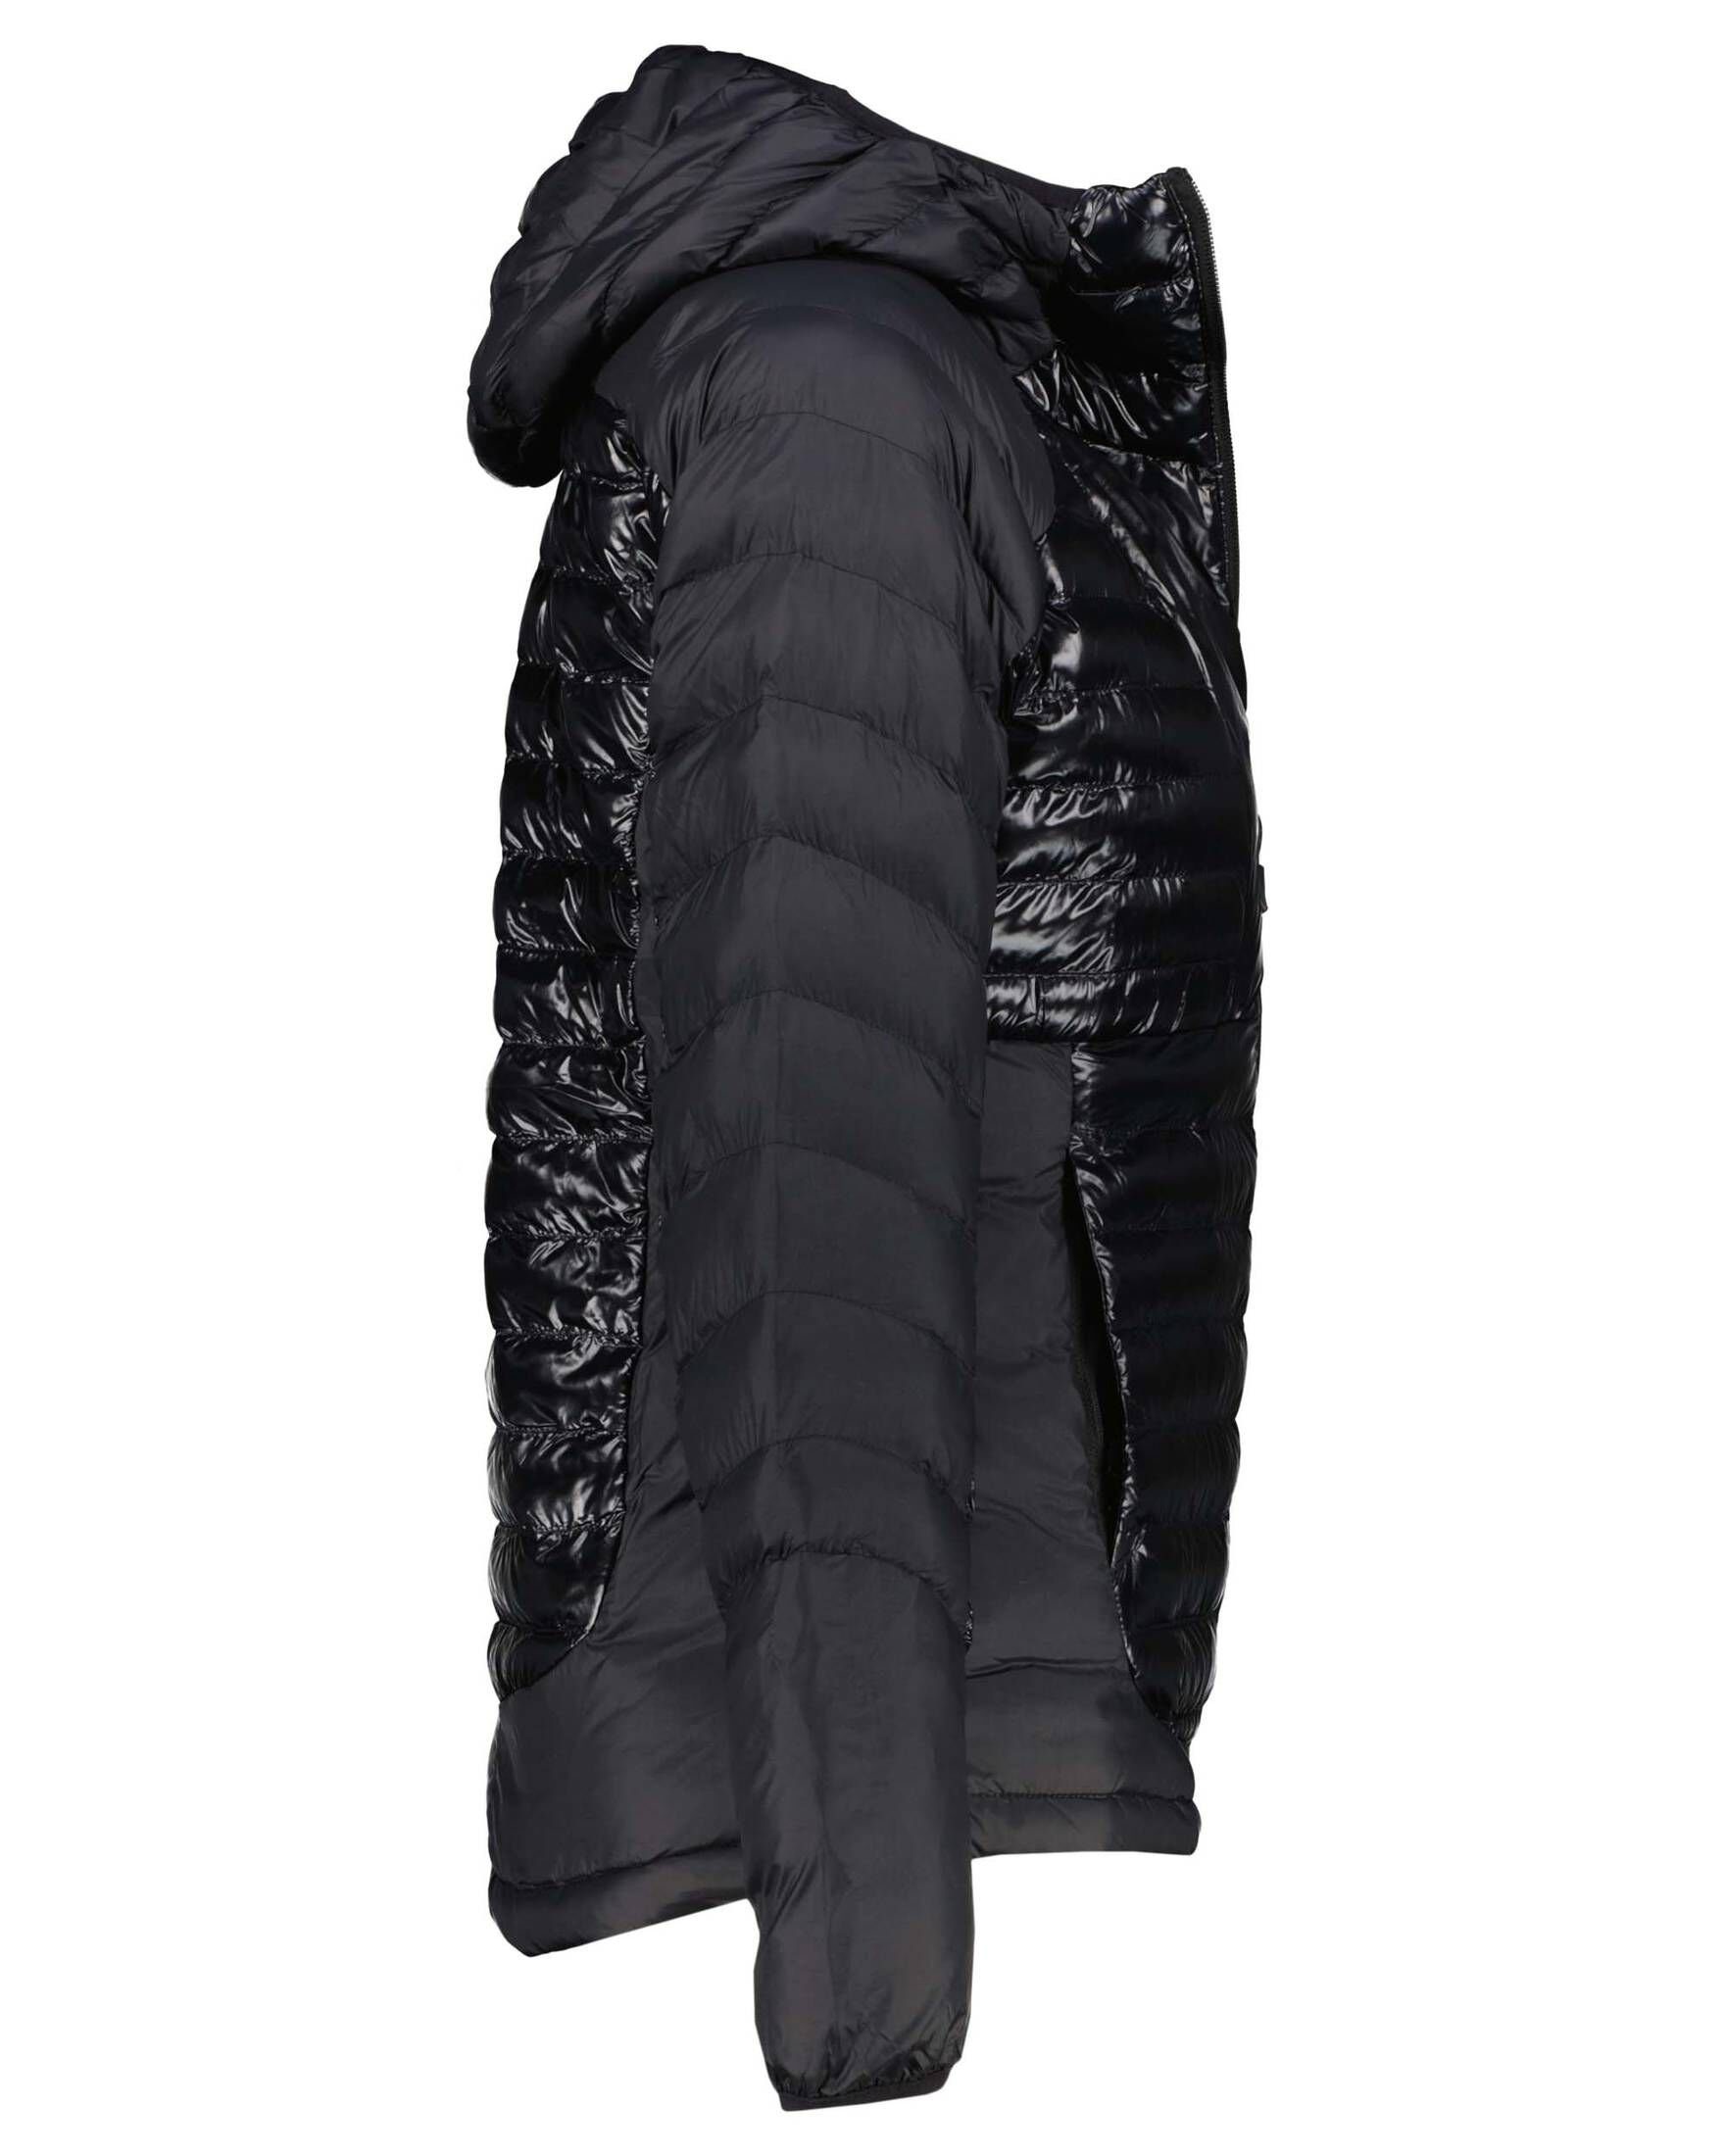 LABYRINTH Winterjacke Damen Columbia (200) LOOP schwarz Freizeitjacke